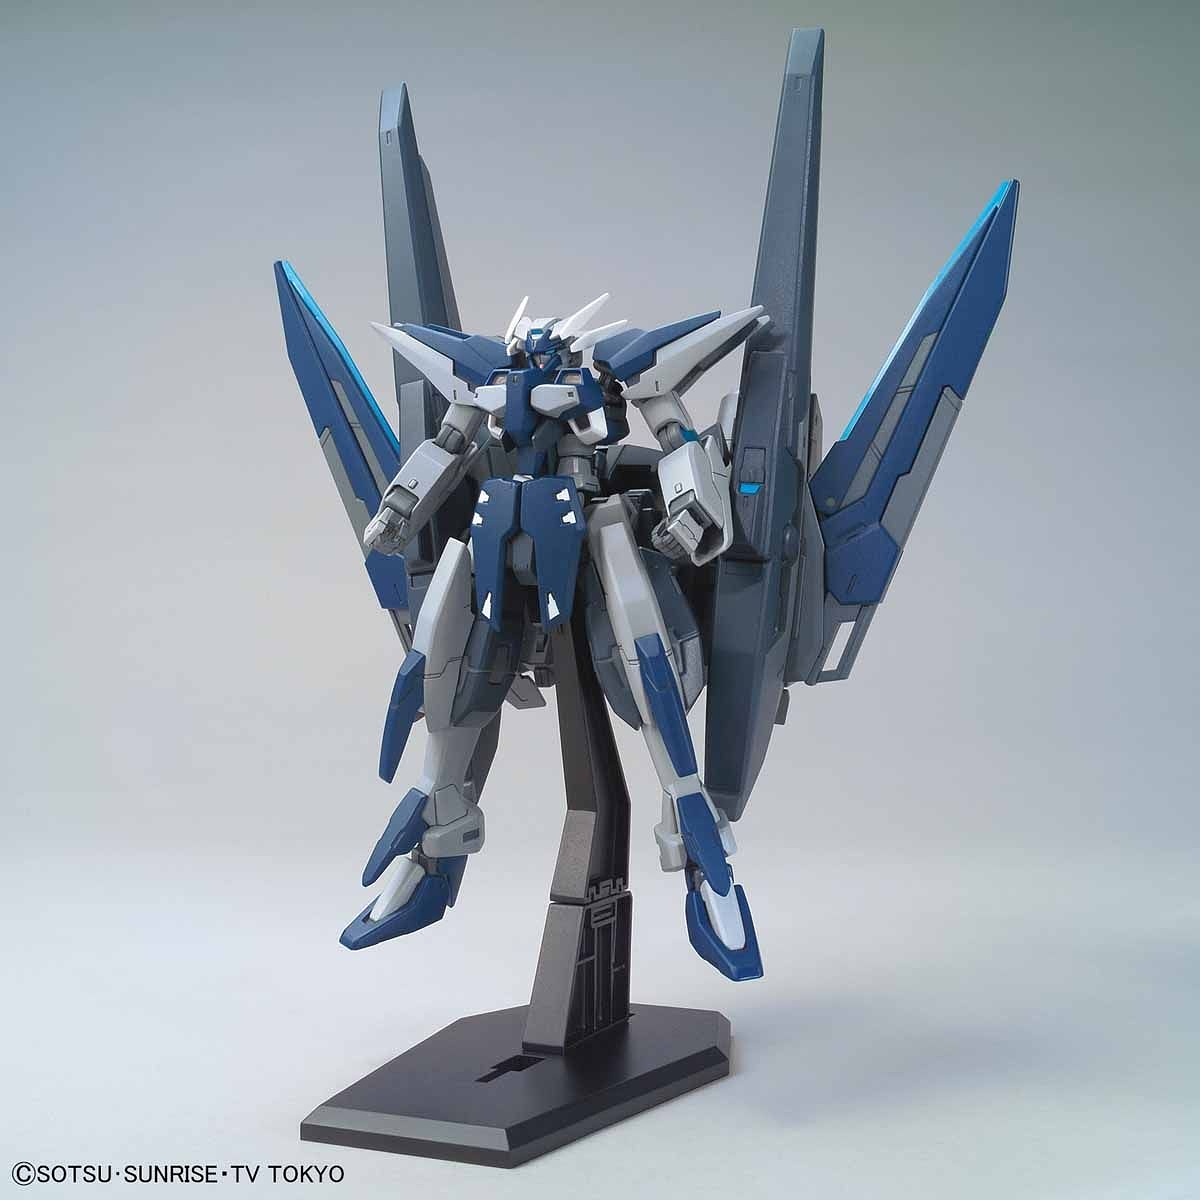 HGBD - GN-011Z Gundam Zerachiel